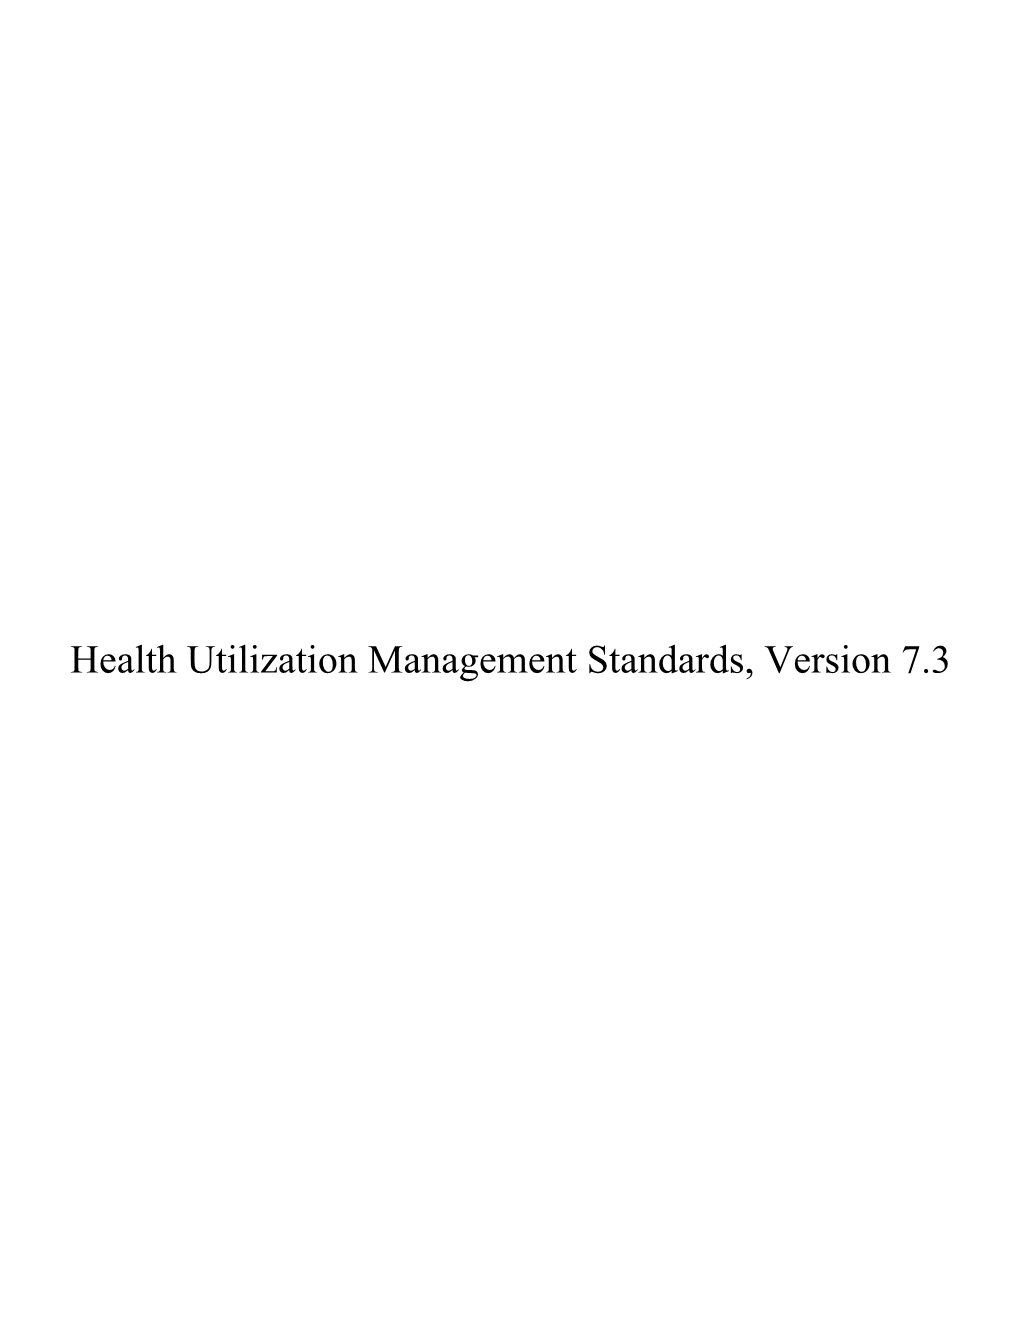 Health Utilization Management Standards, Version 7.3 Table of Contents